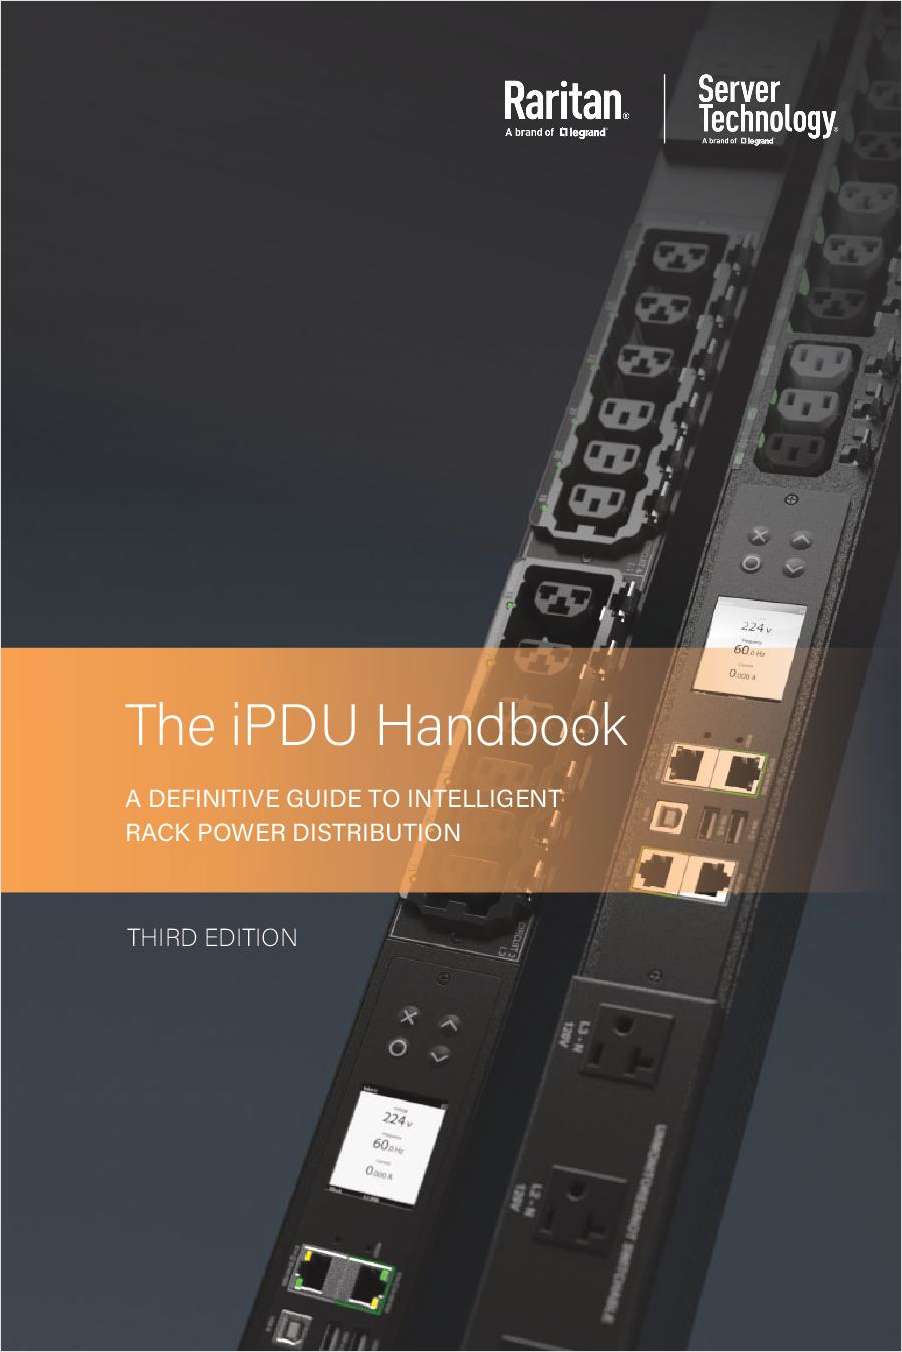 The iPDU Handbook: A Definitive Guide to Intelligent Rack Power Distribution